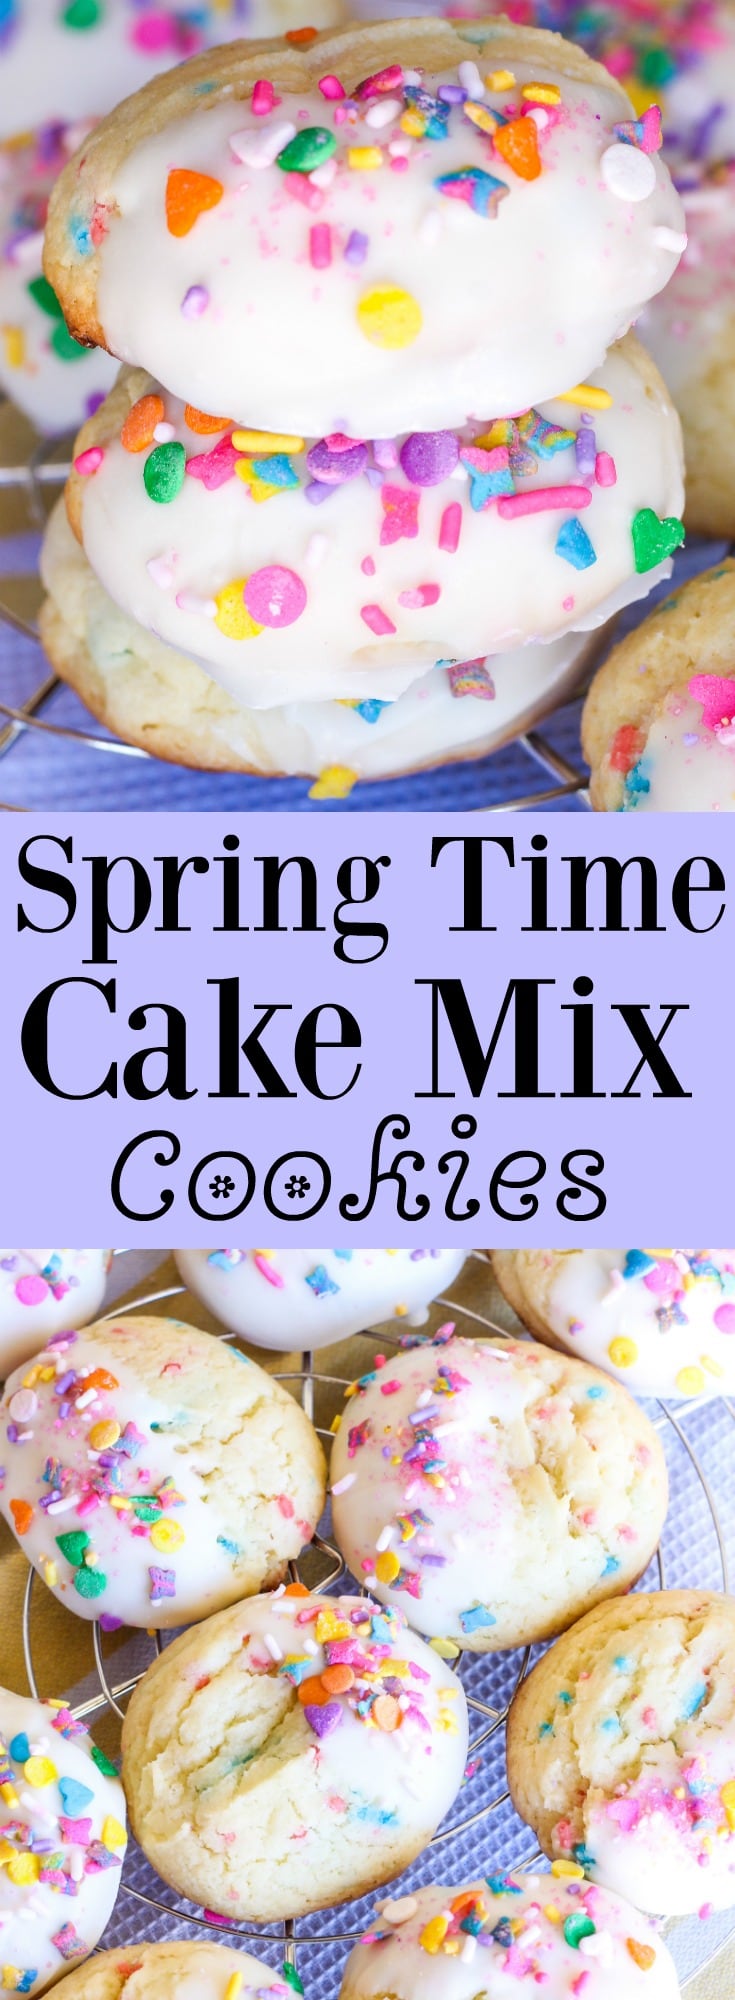 Spring Time Cake Mix Cookies